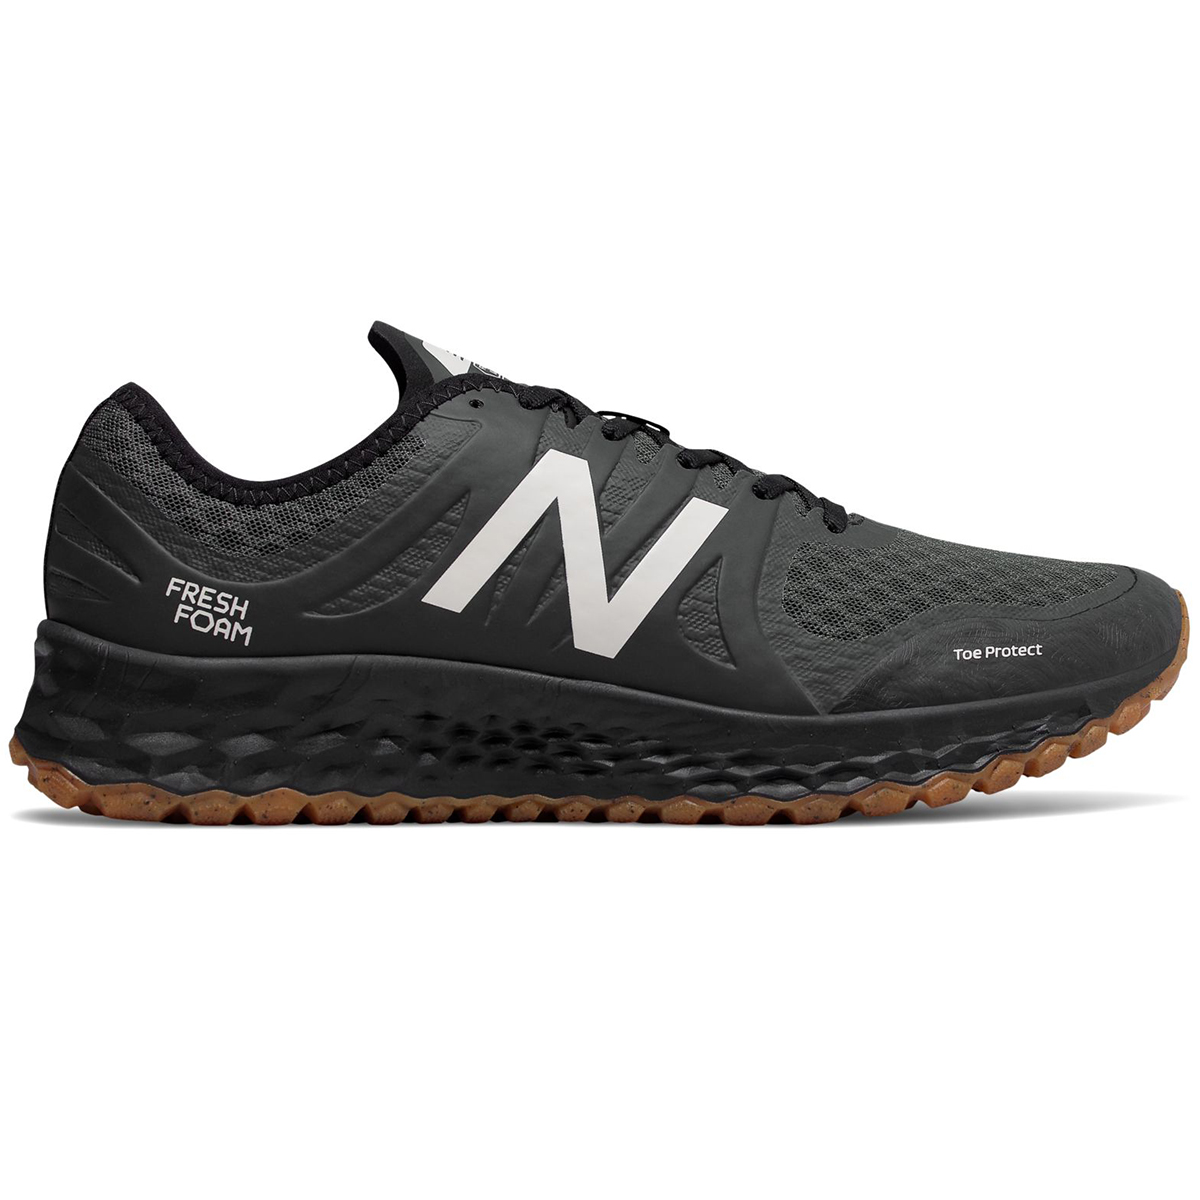 New Balance Men's Fresh Foam Kaymin Trl Trail Running Shoes - Black, 9